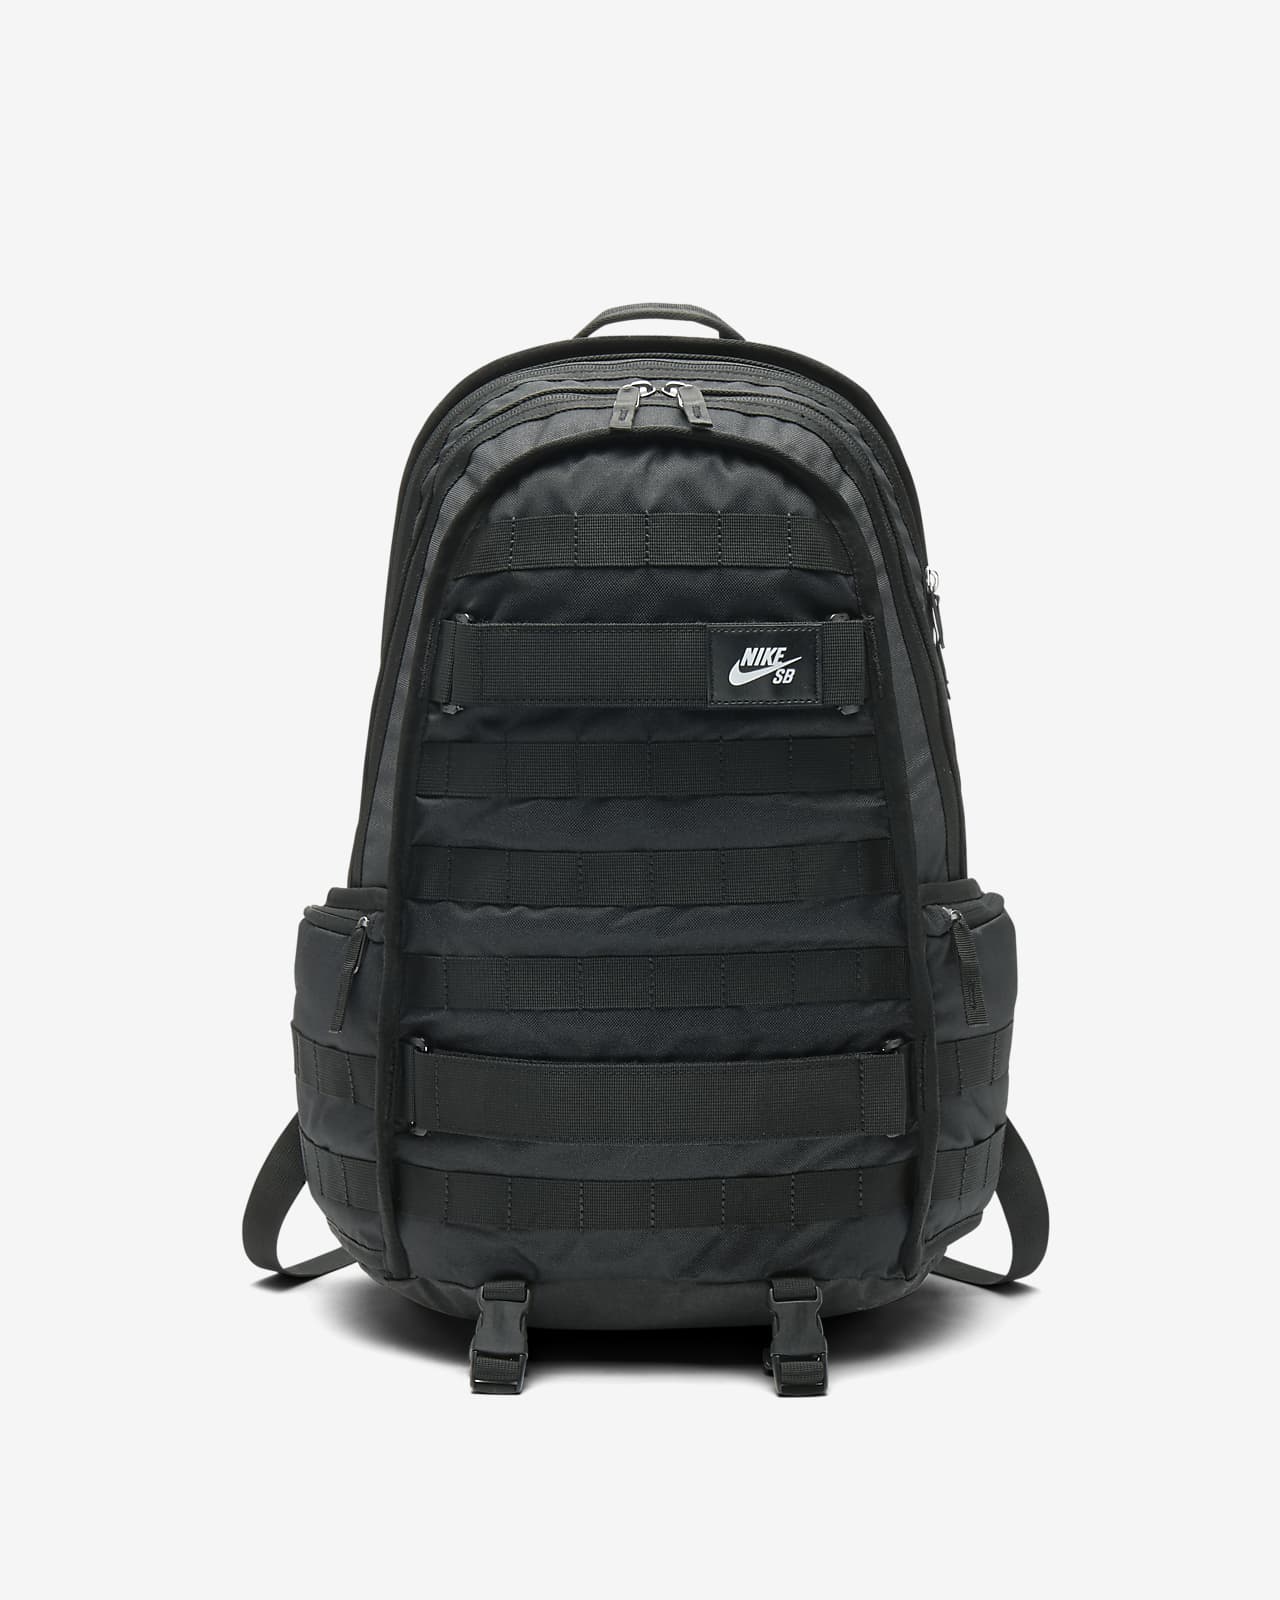 Nike Sb Rpm Backpack Canada Online Shopping